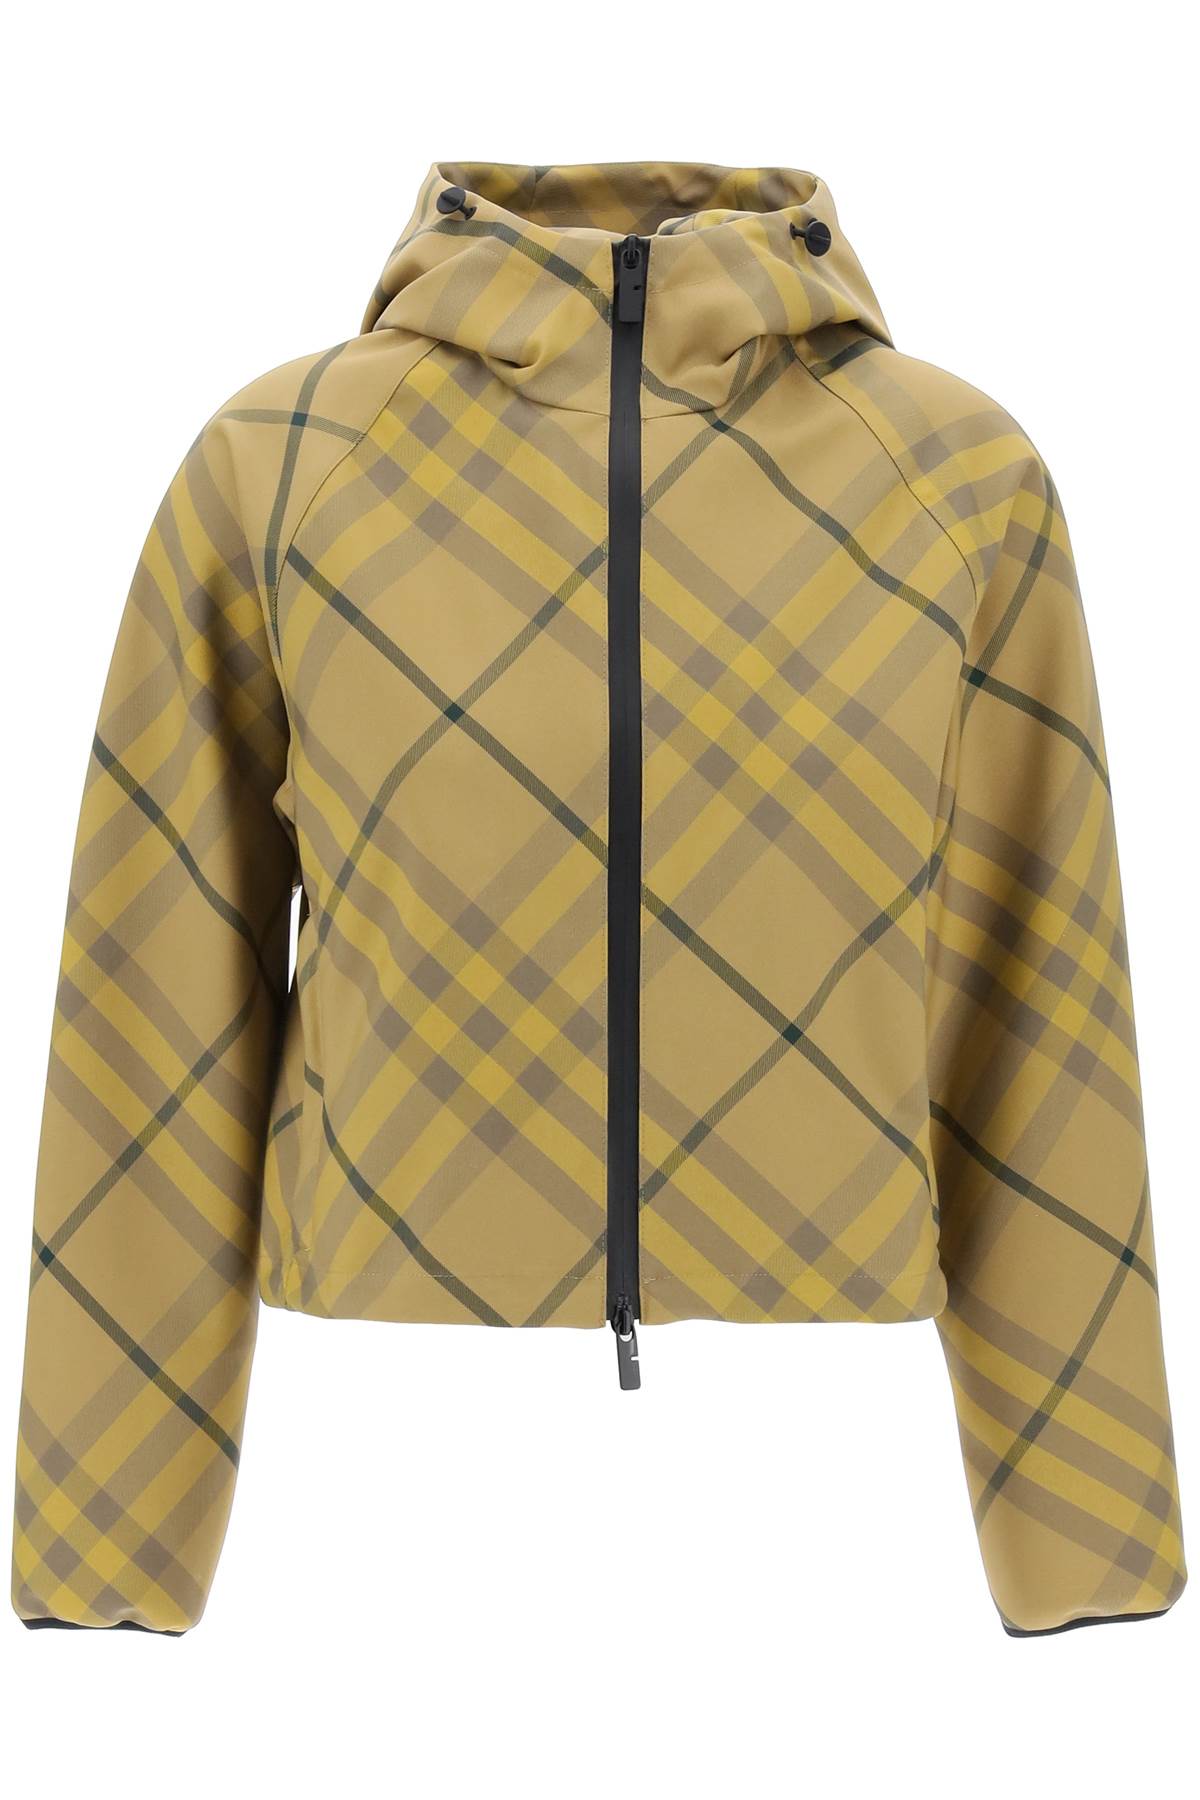 Burberry "cropped burberry check jacket"-Jacket-Burberry-M-Khaki-Urbanheer